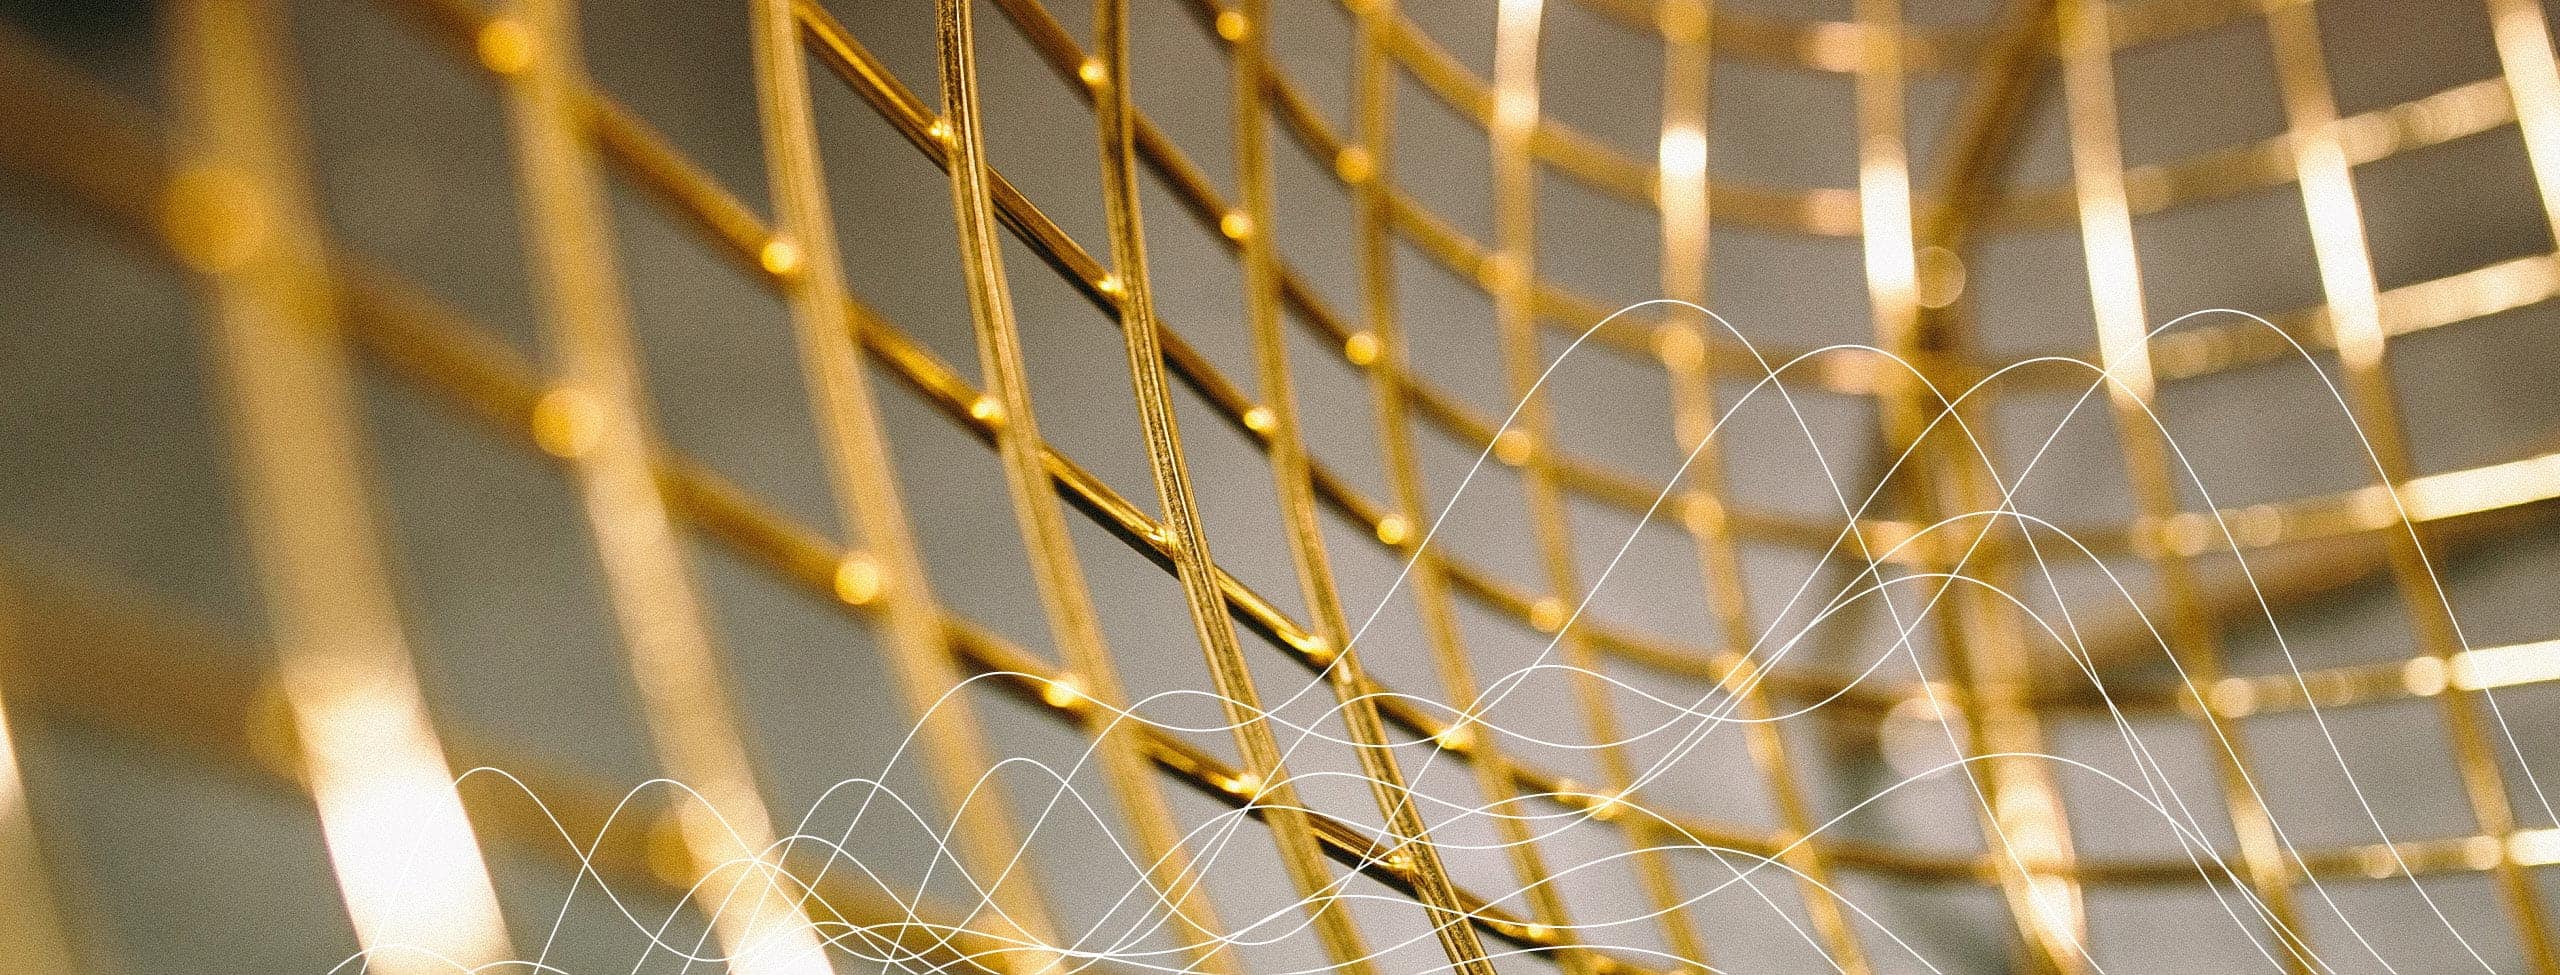 Golden mesh close up